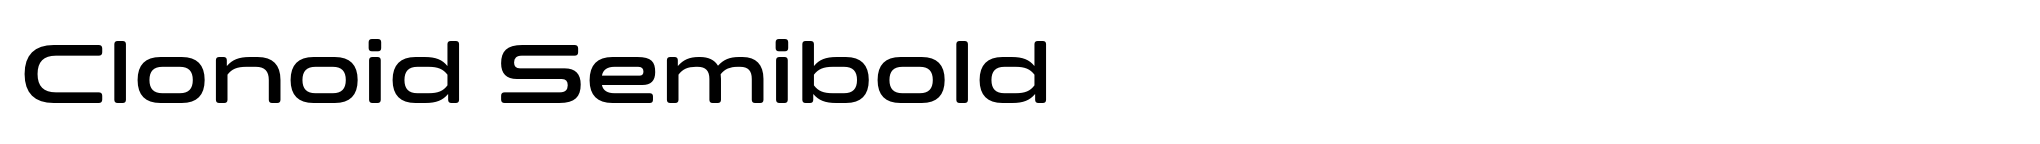 Clonoid Semibold image